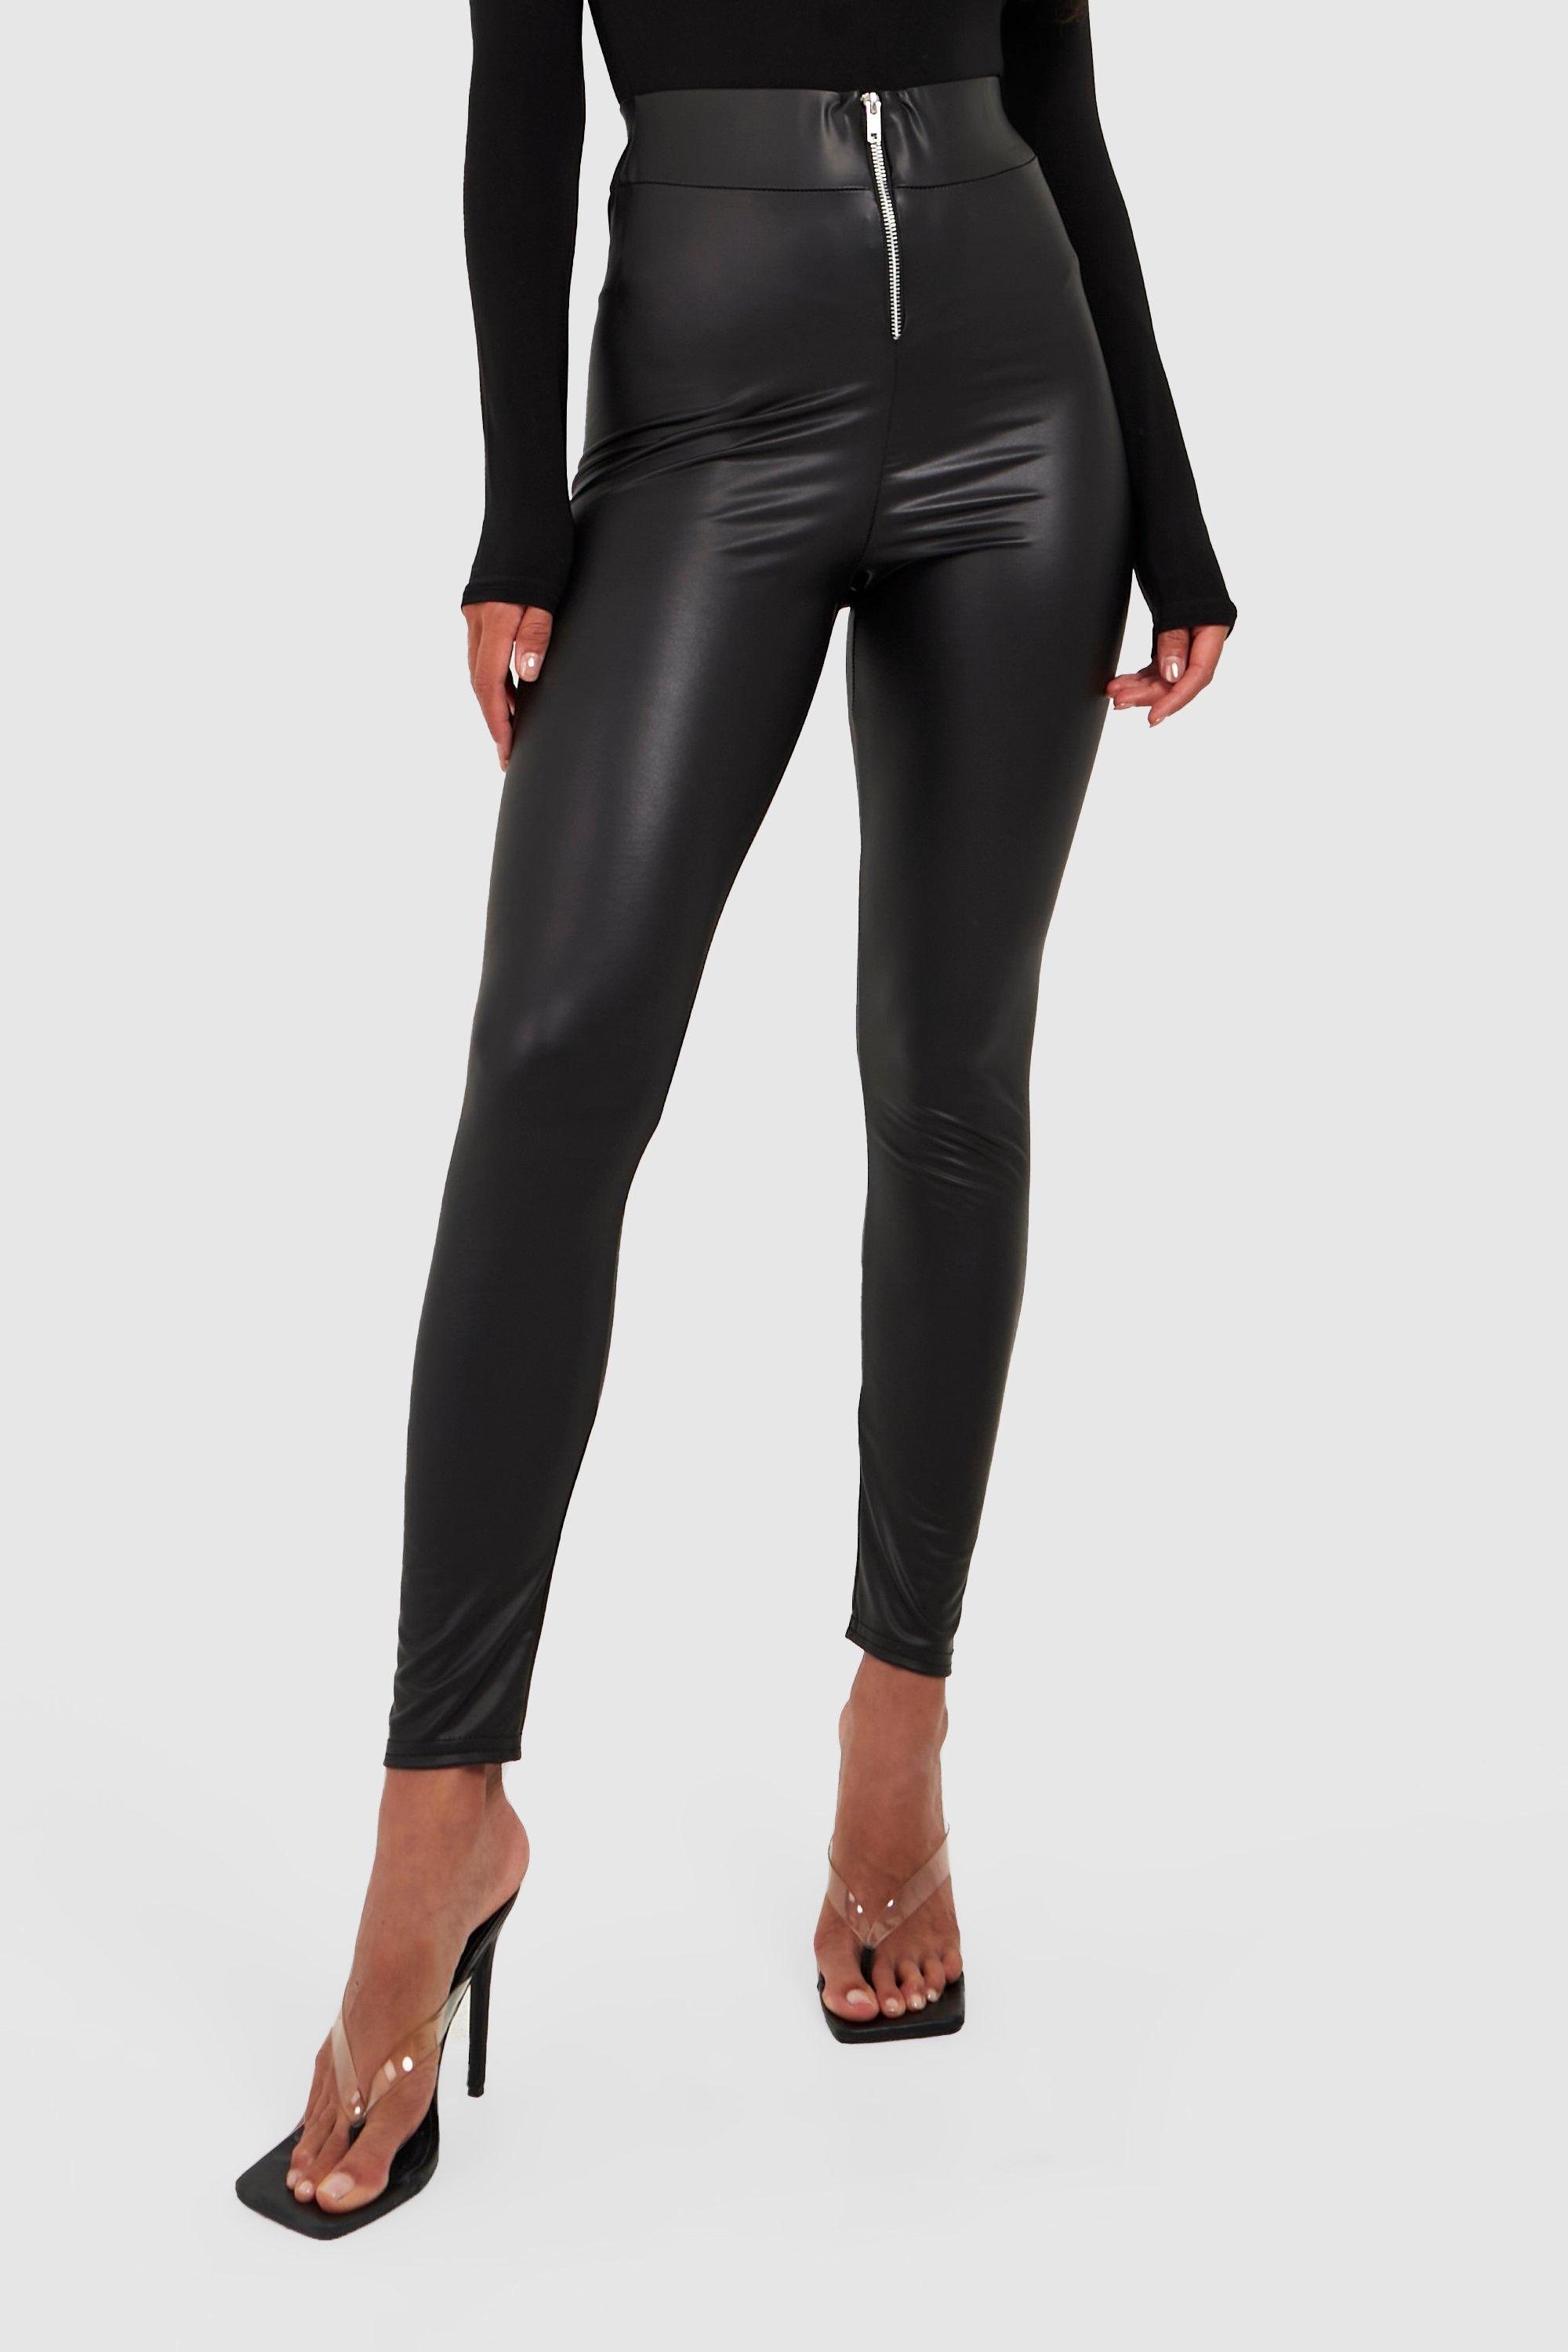 https://media.boohoo.com/i/boohoo/dzz05337_black_xl_3/female-black-zip-front-shiny-leggings